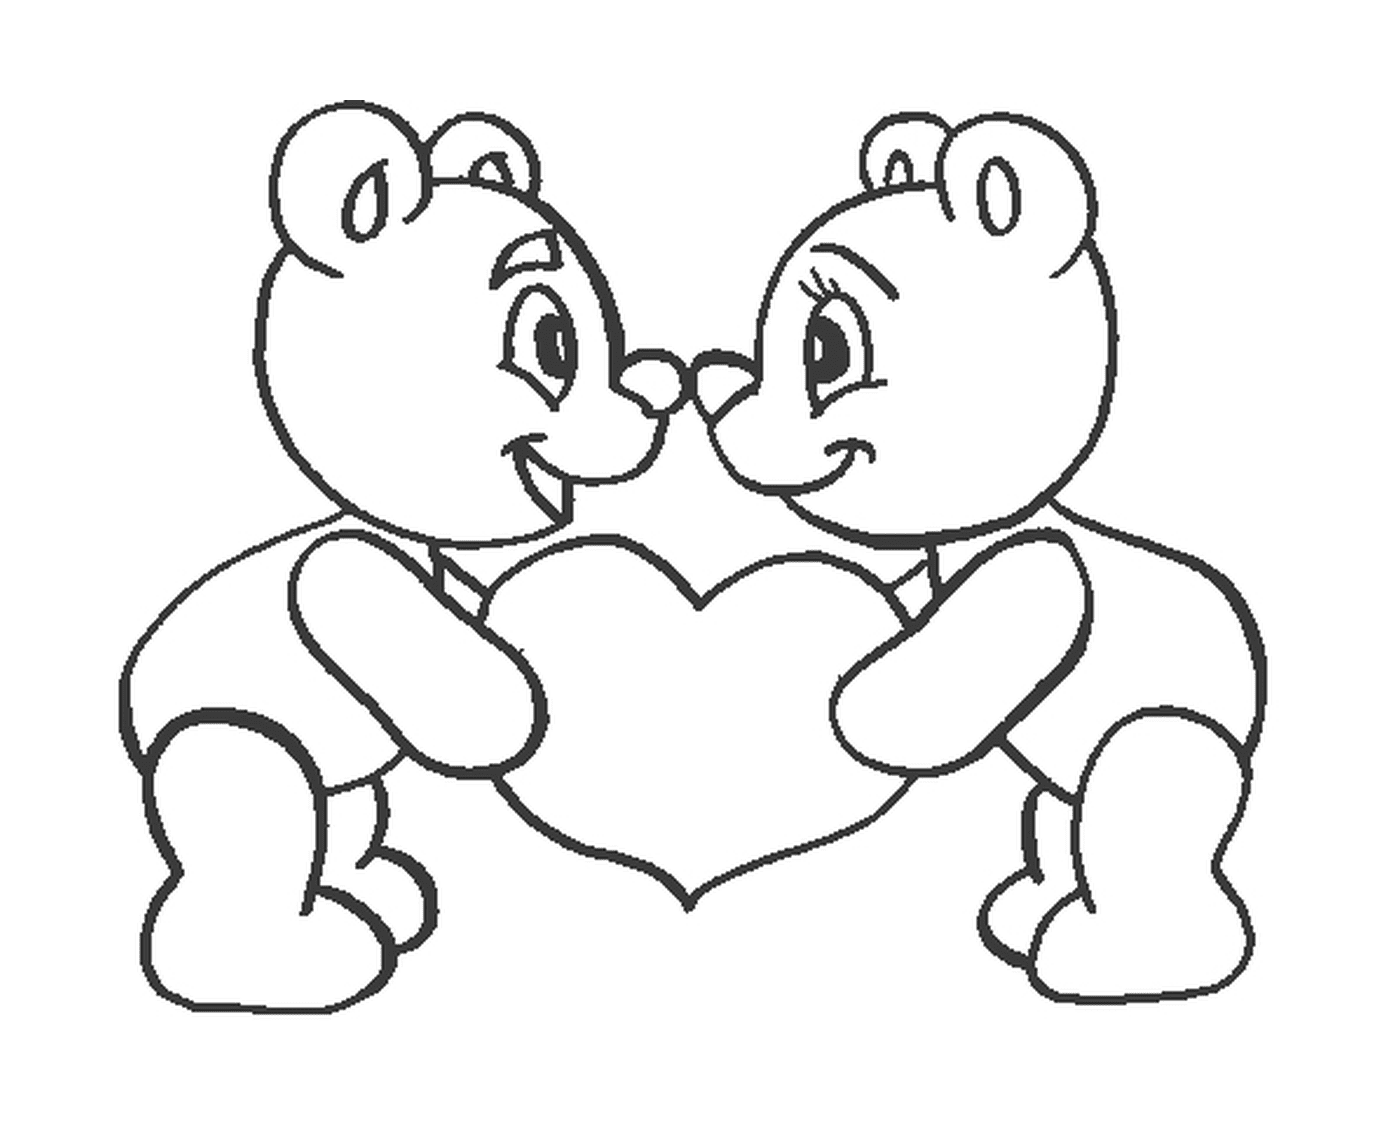  Two teddy bears holding a heart 